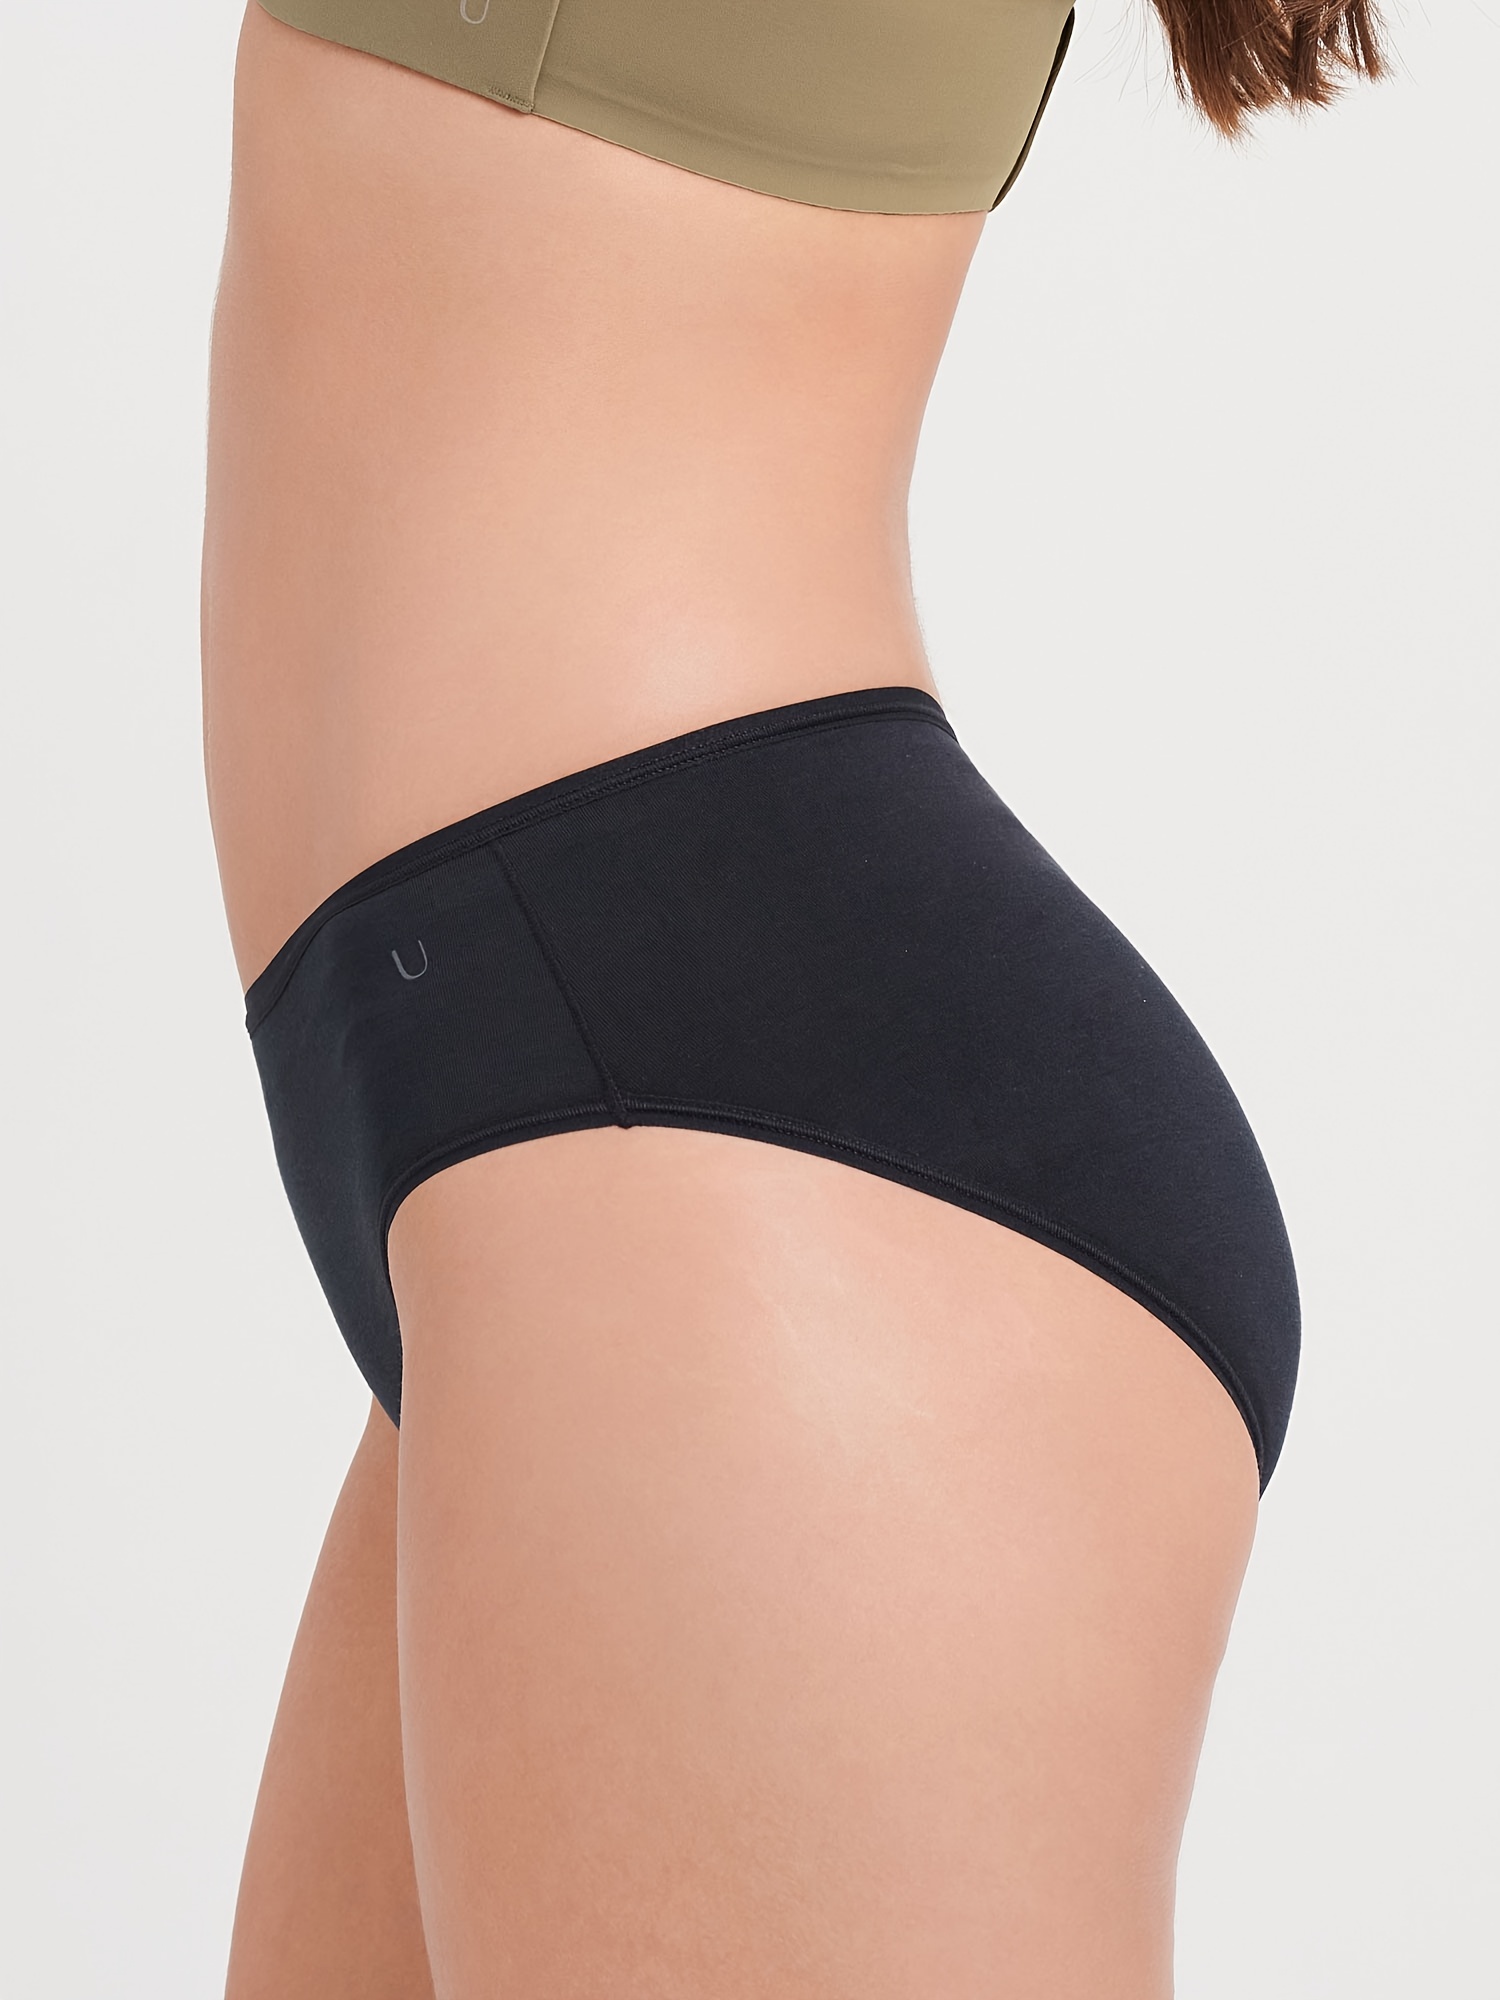 Ubras High Quality Comfortable Mid Waist Bikini Panties, Solid Breathable  Medium Stretch Panties, Women's Underwear & Lingerie